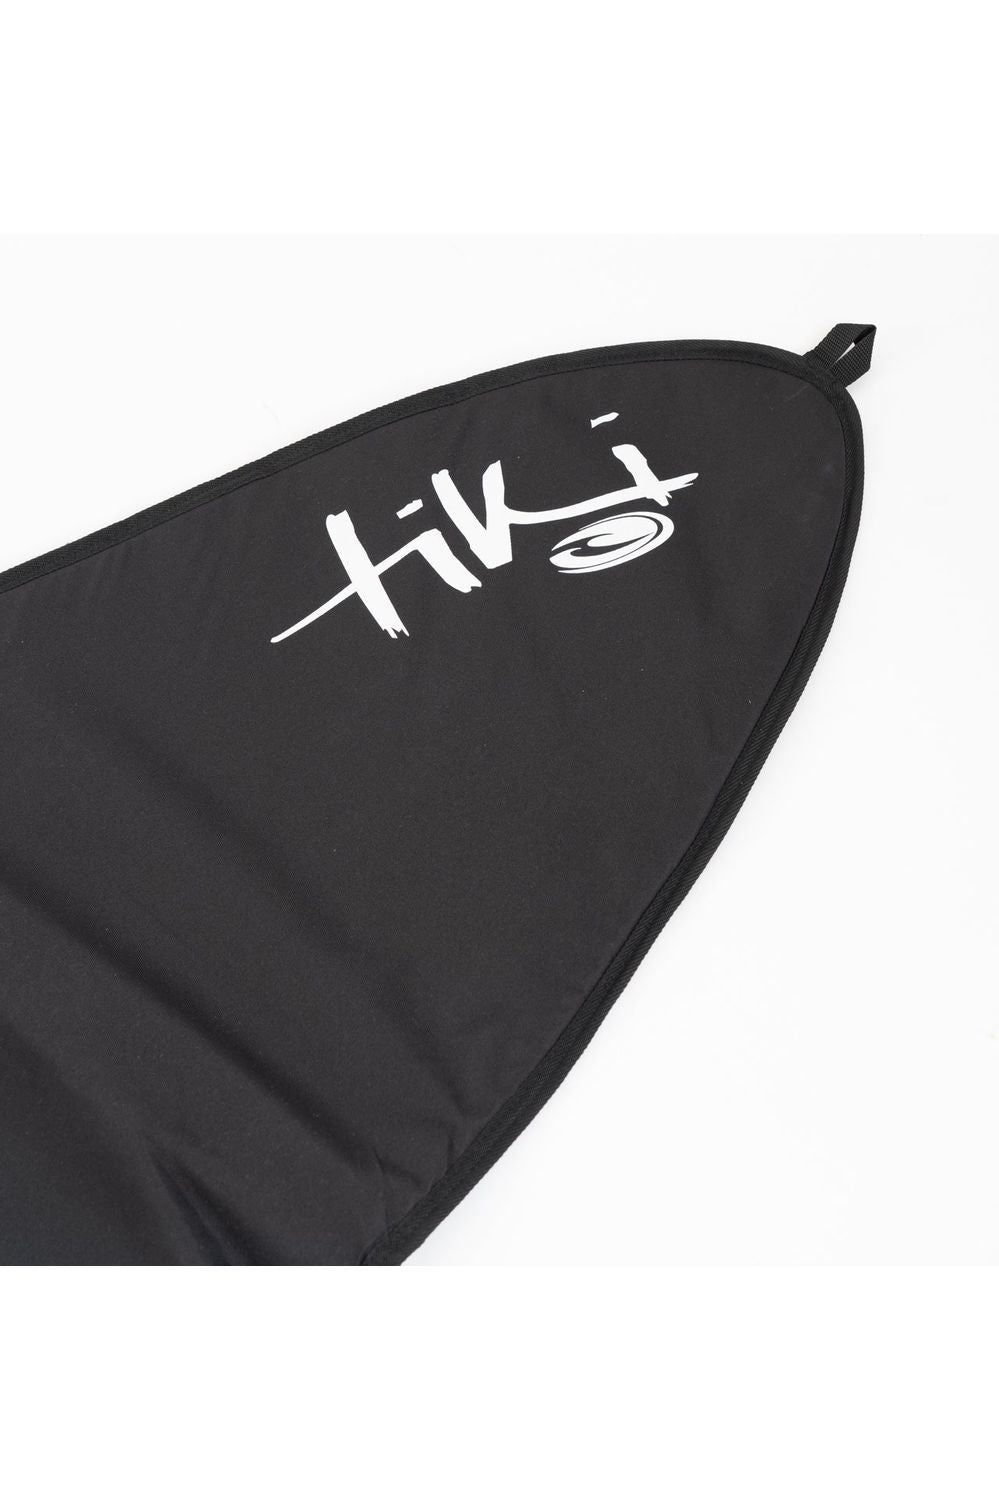 Tiki Economy Surf Board Bag